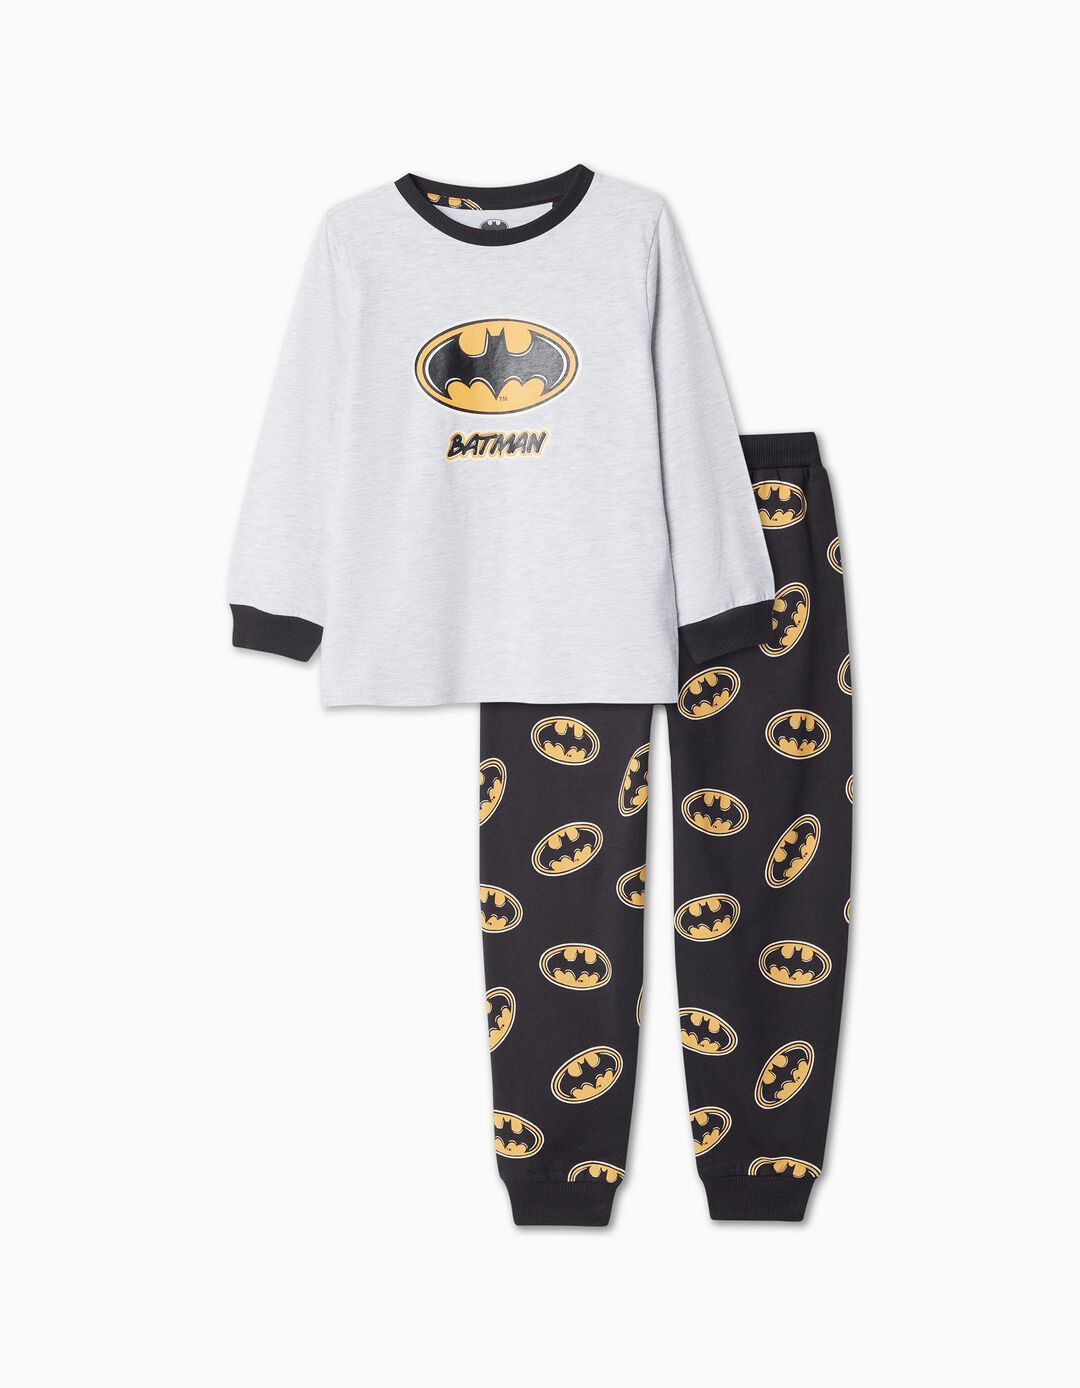 Pajamas 'Batman', Boy, Multiple colors